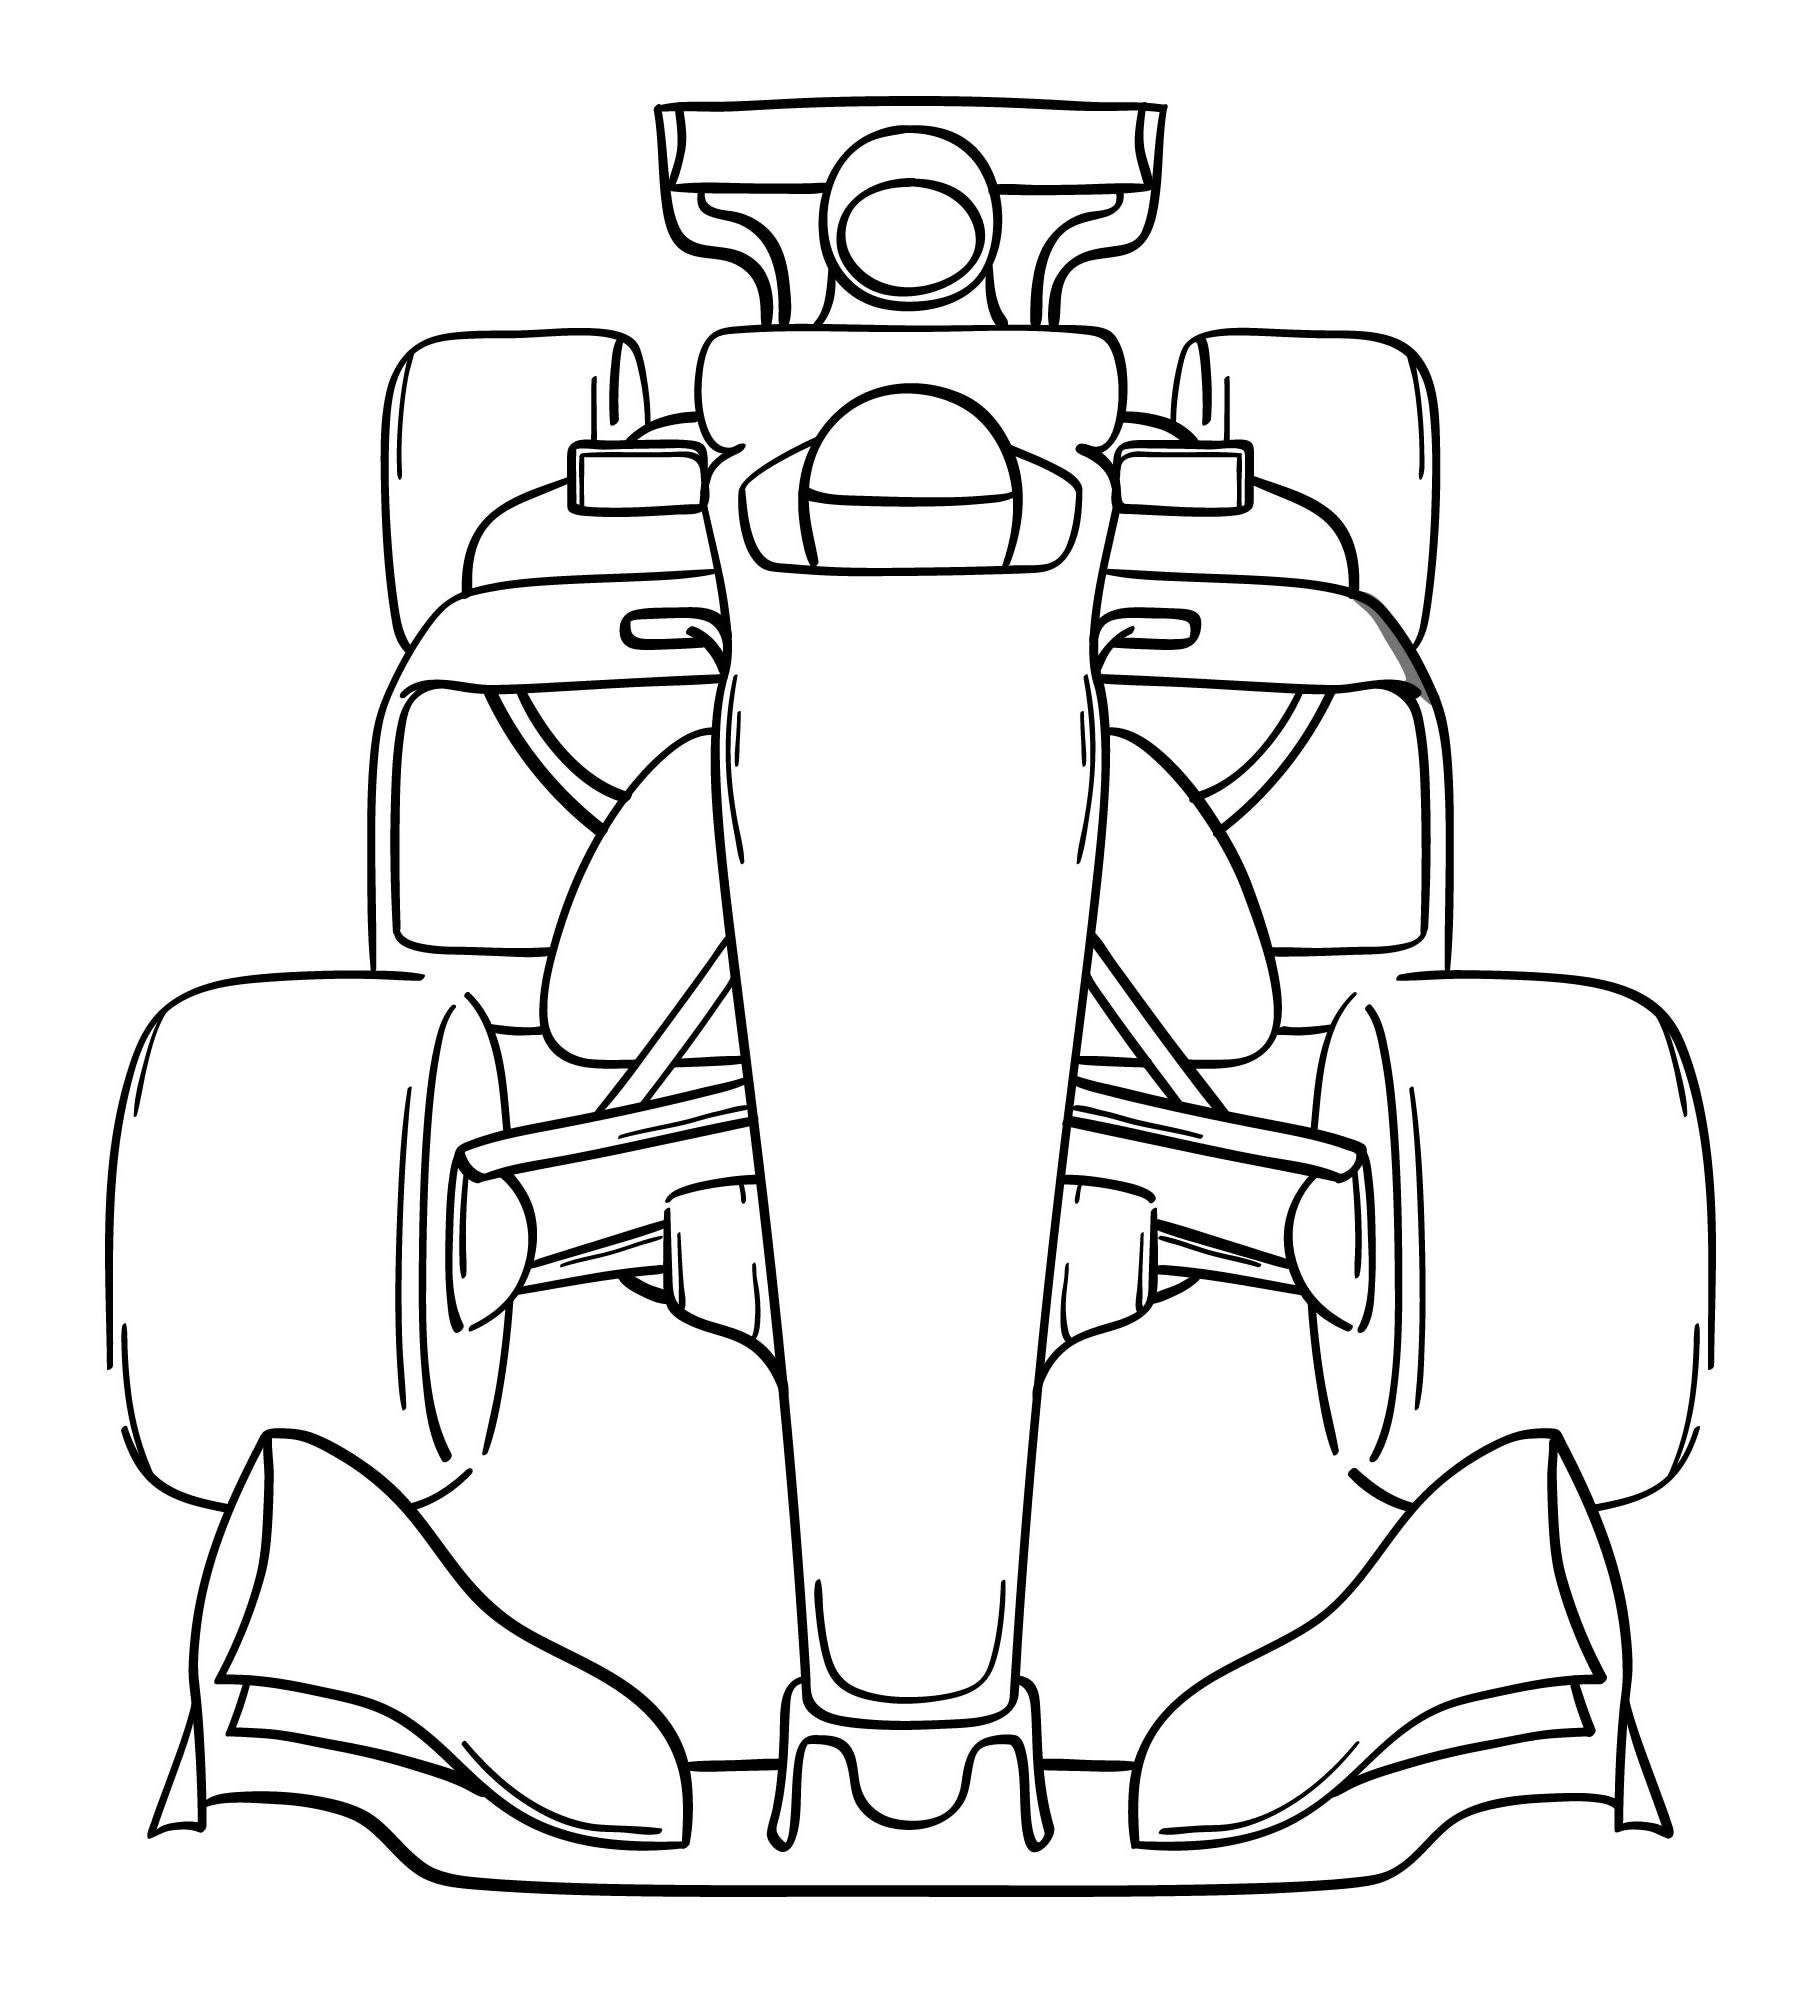 раскраски F1 - Формула-1